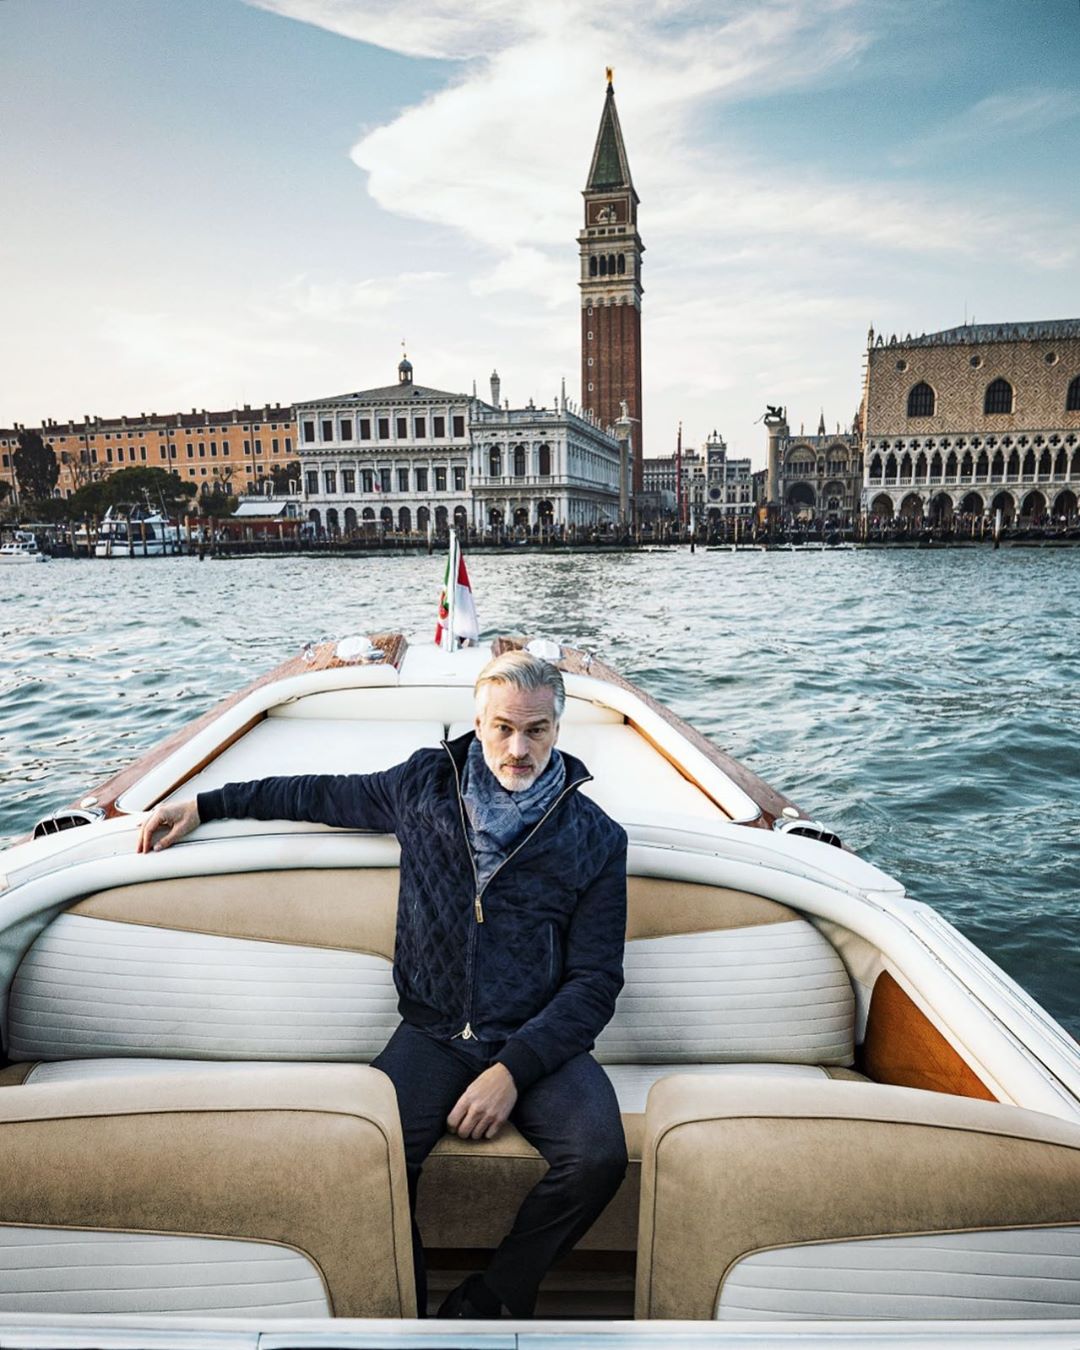 Stefano Ricci - Venezia, Celebrating the Great Beauty of Italy ∙
#stefanoricci #fw21 Collection
.
#EnjoyRespectVenezia
#SR #SRworld